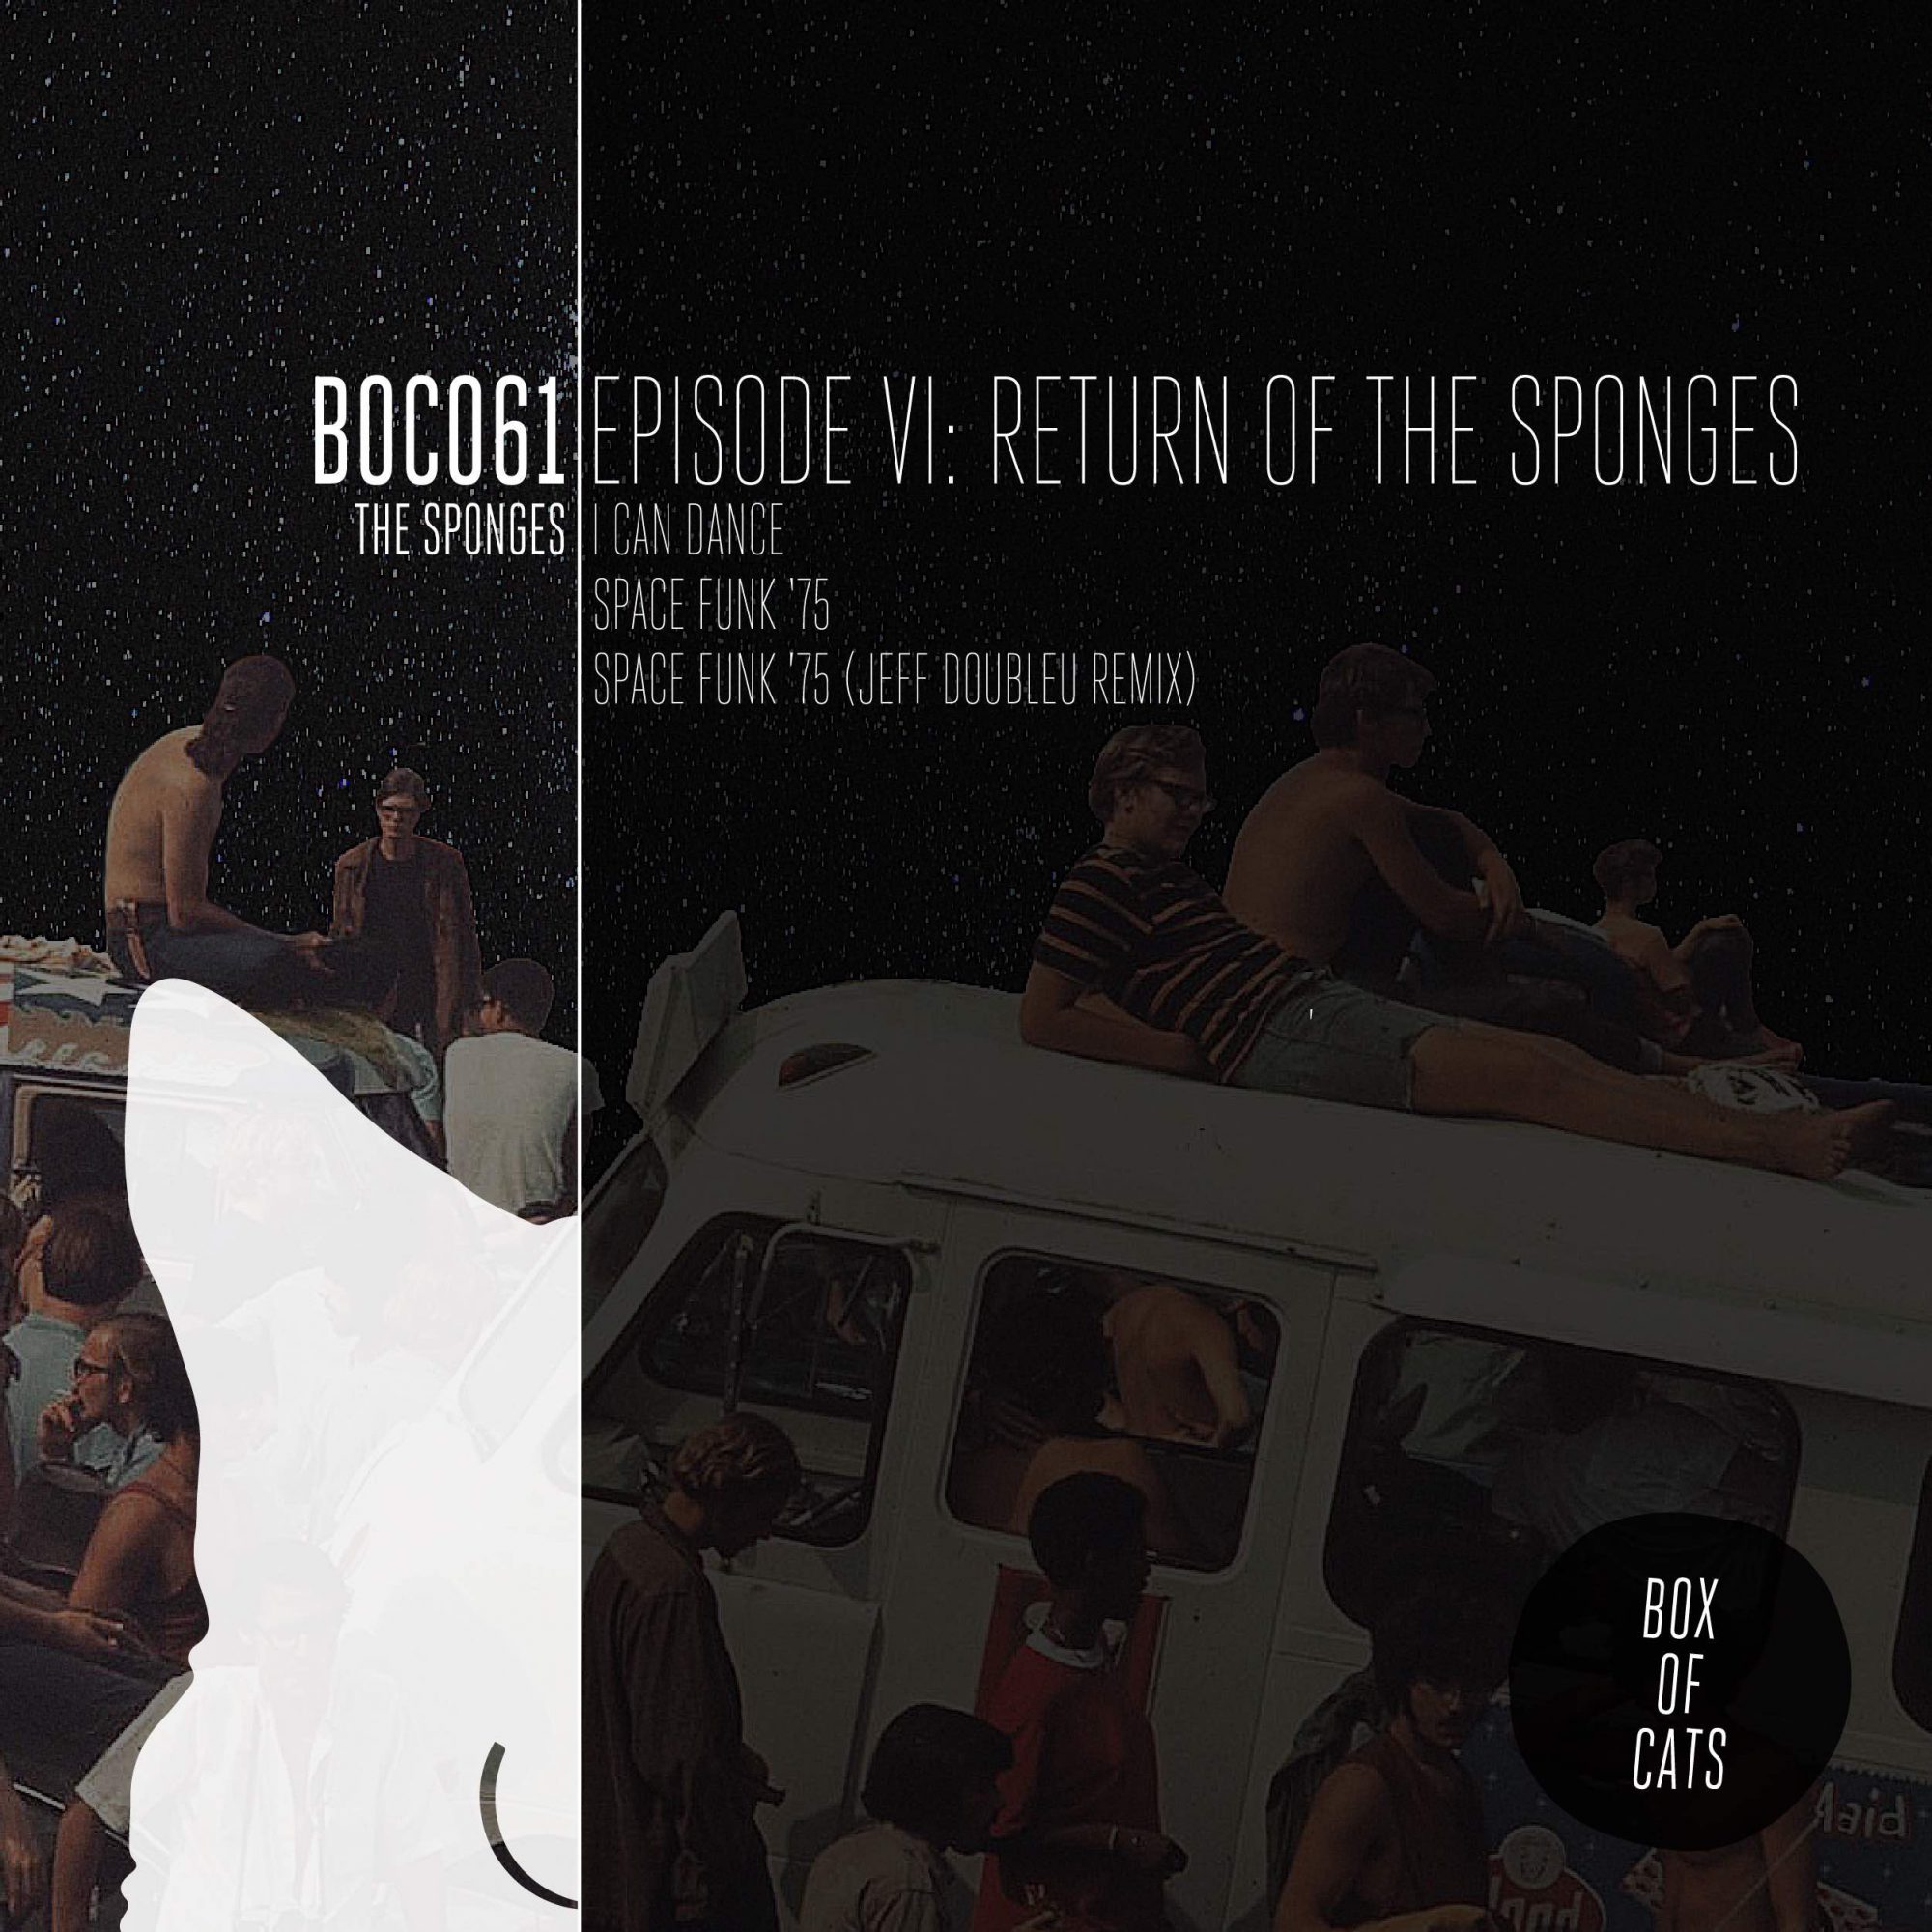 The Sponges - Episode VI: Return of the Sponges